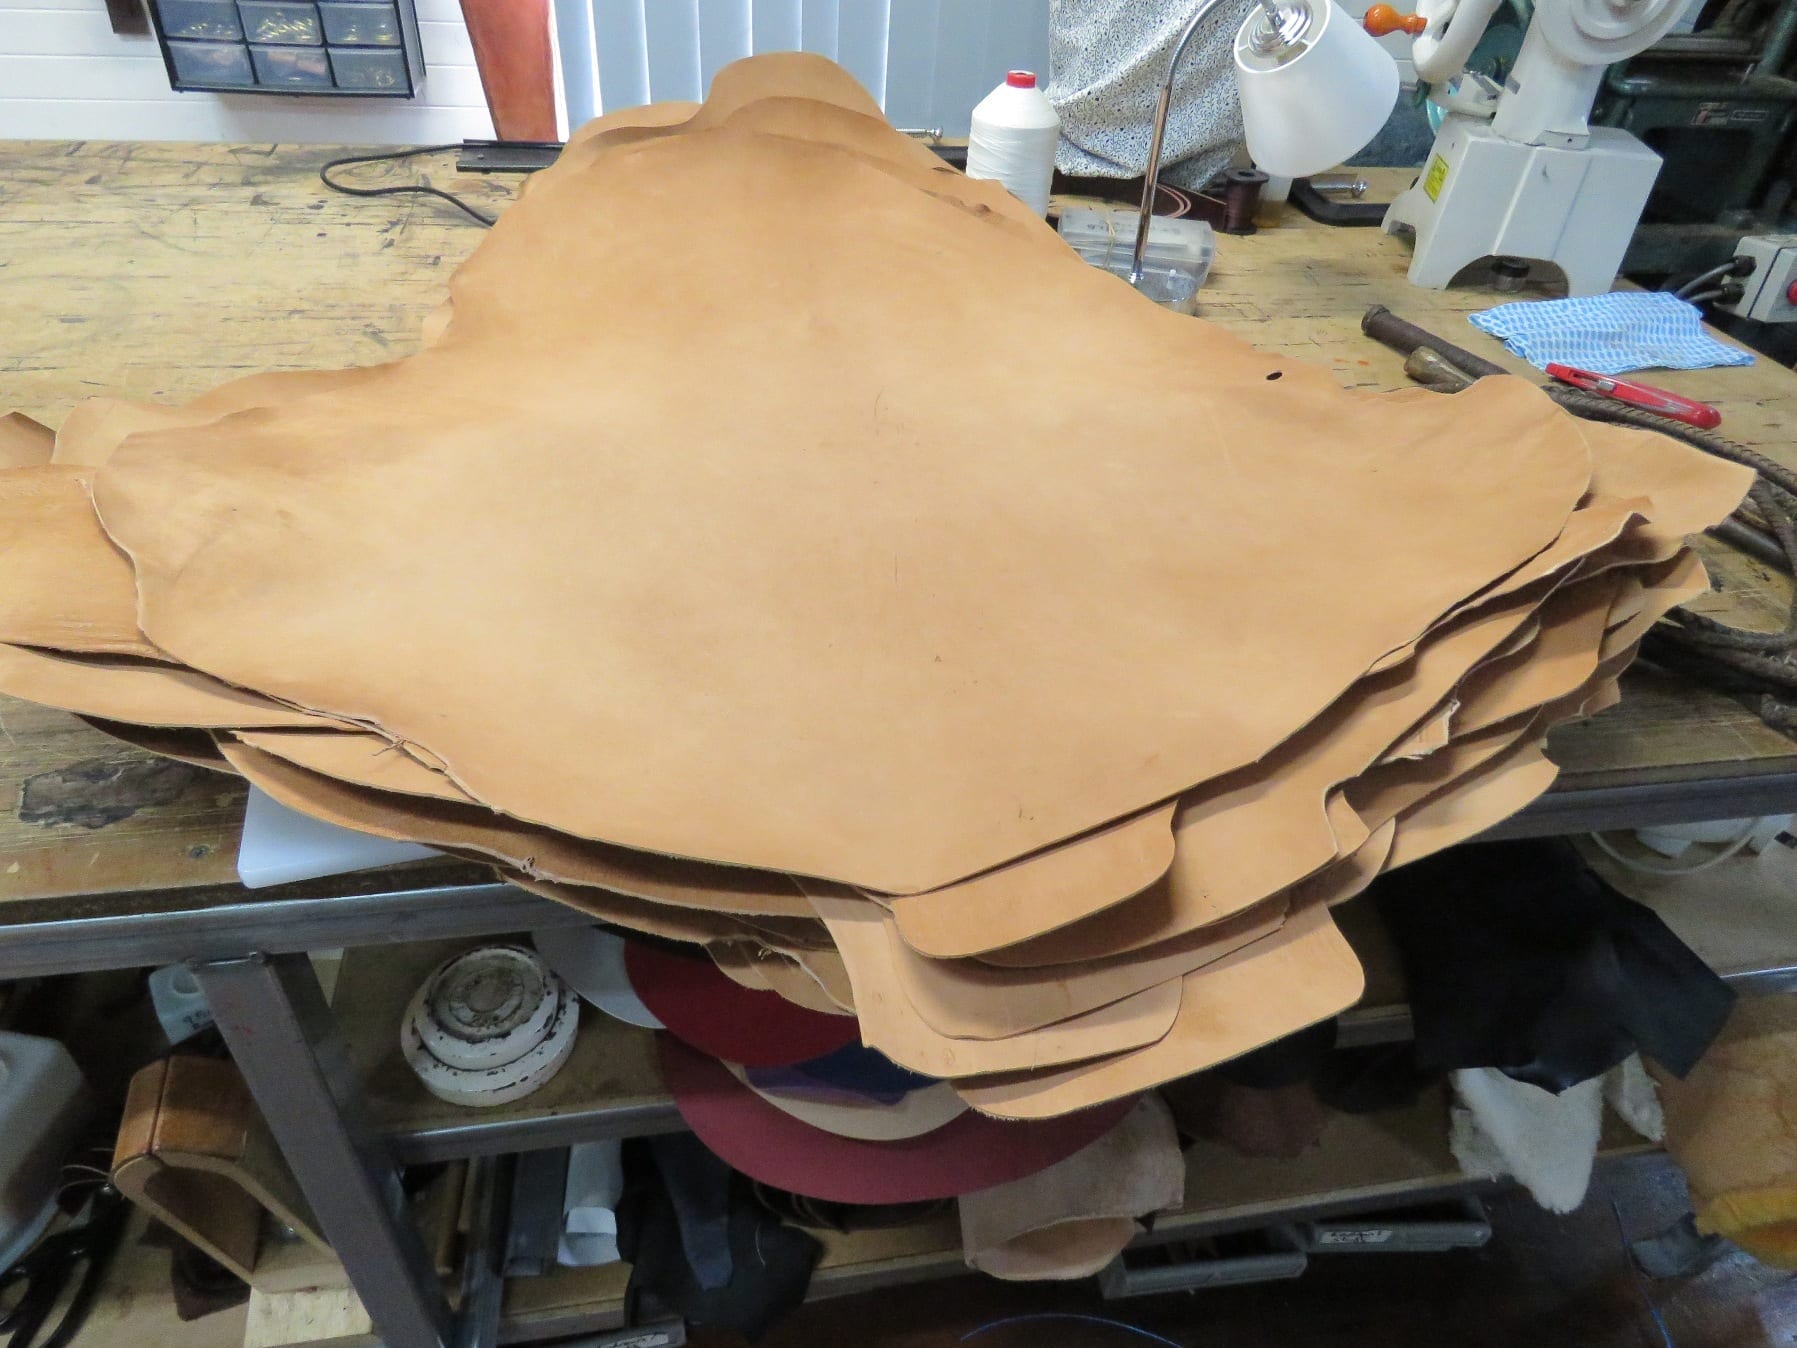 WHISKY Color VEG TANNED Kangaroo leather skin hide for plaiting whip making etc. 